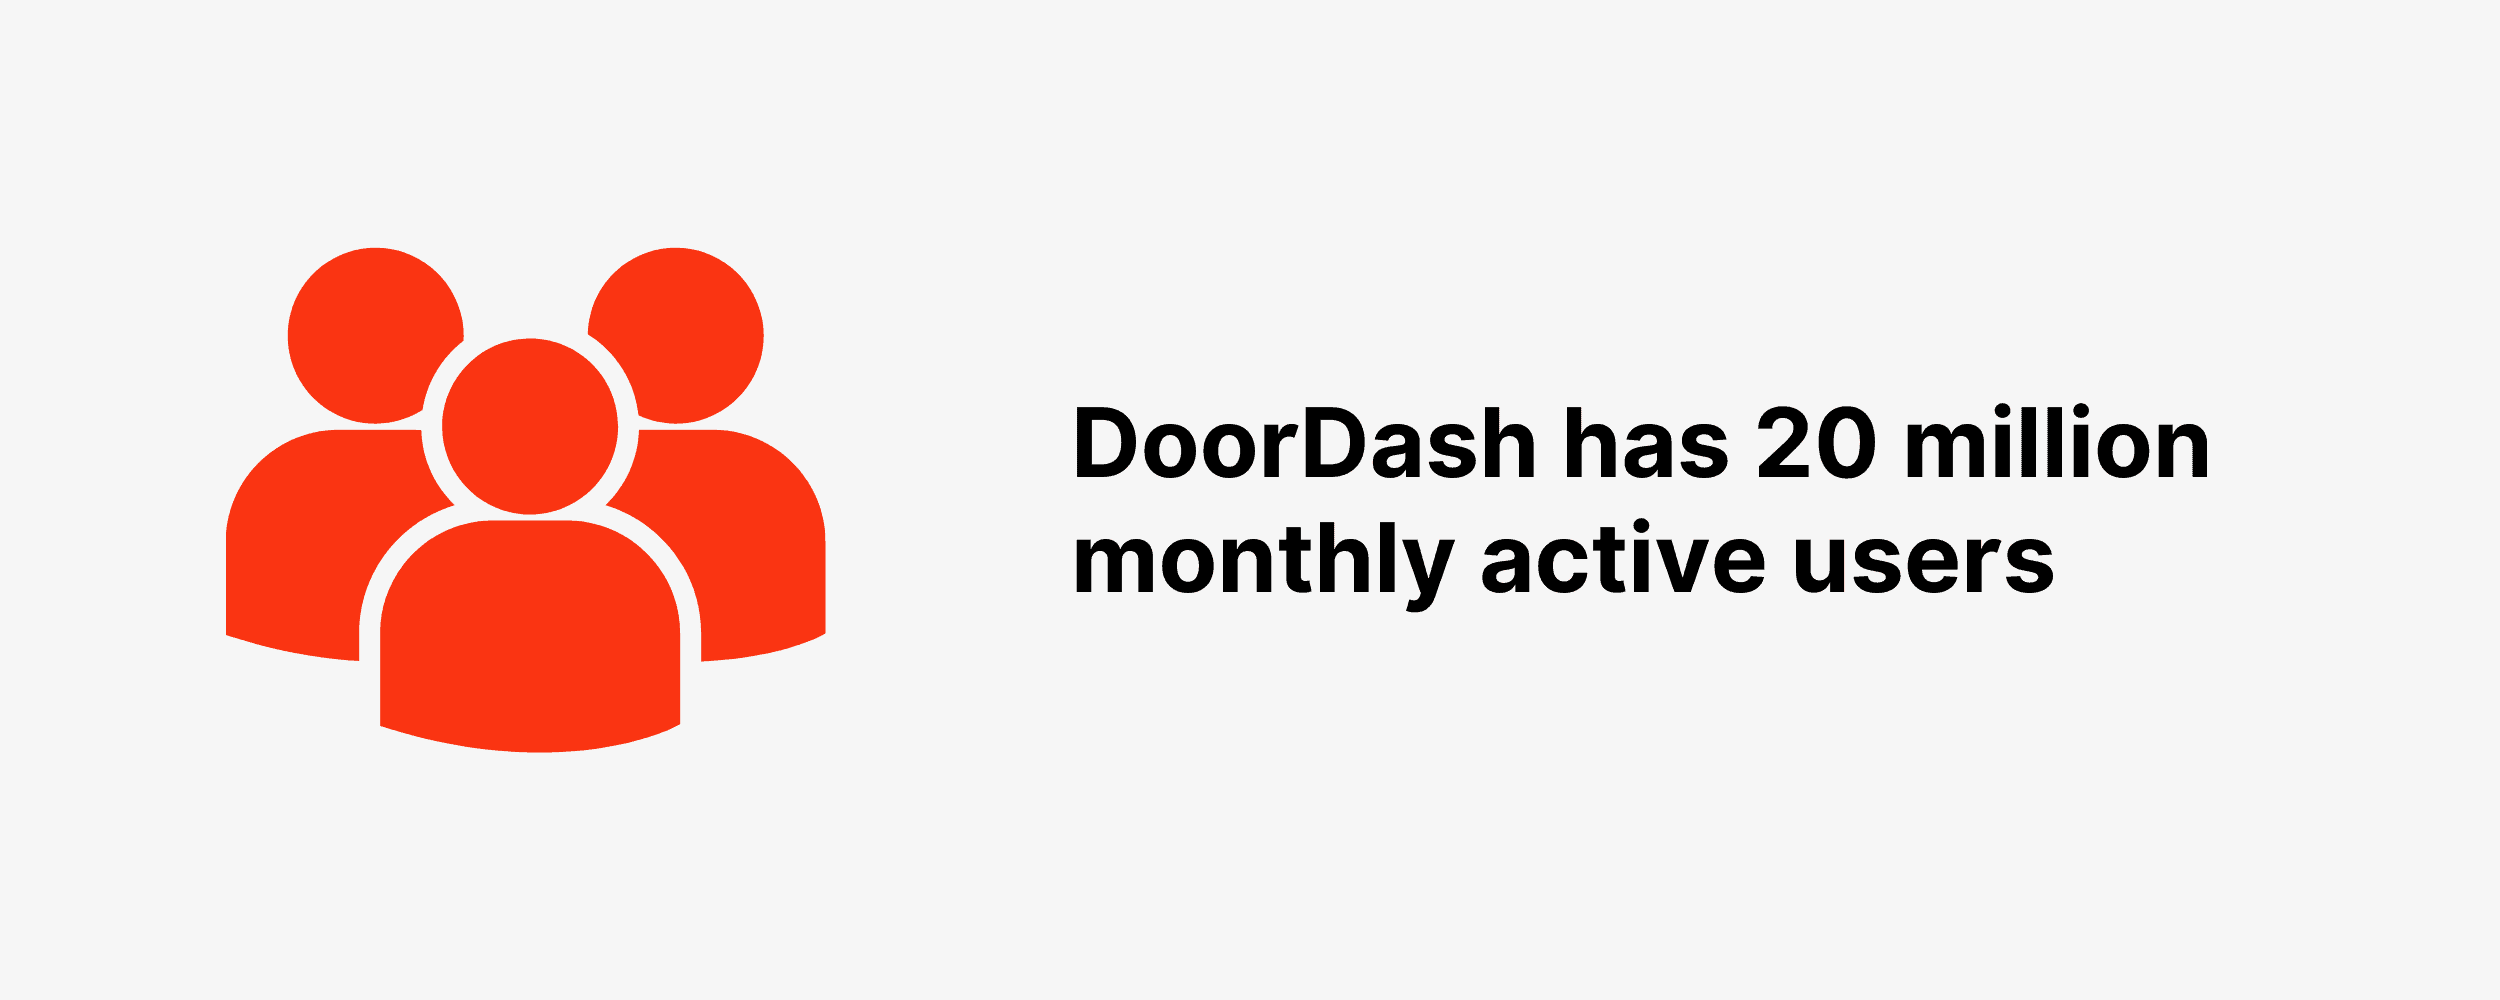 DoorDash has 20 million monthly active users